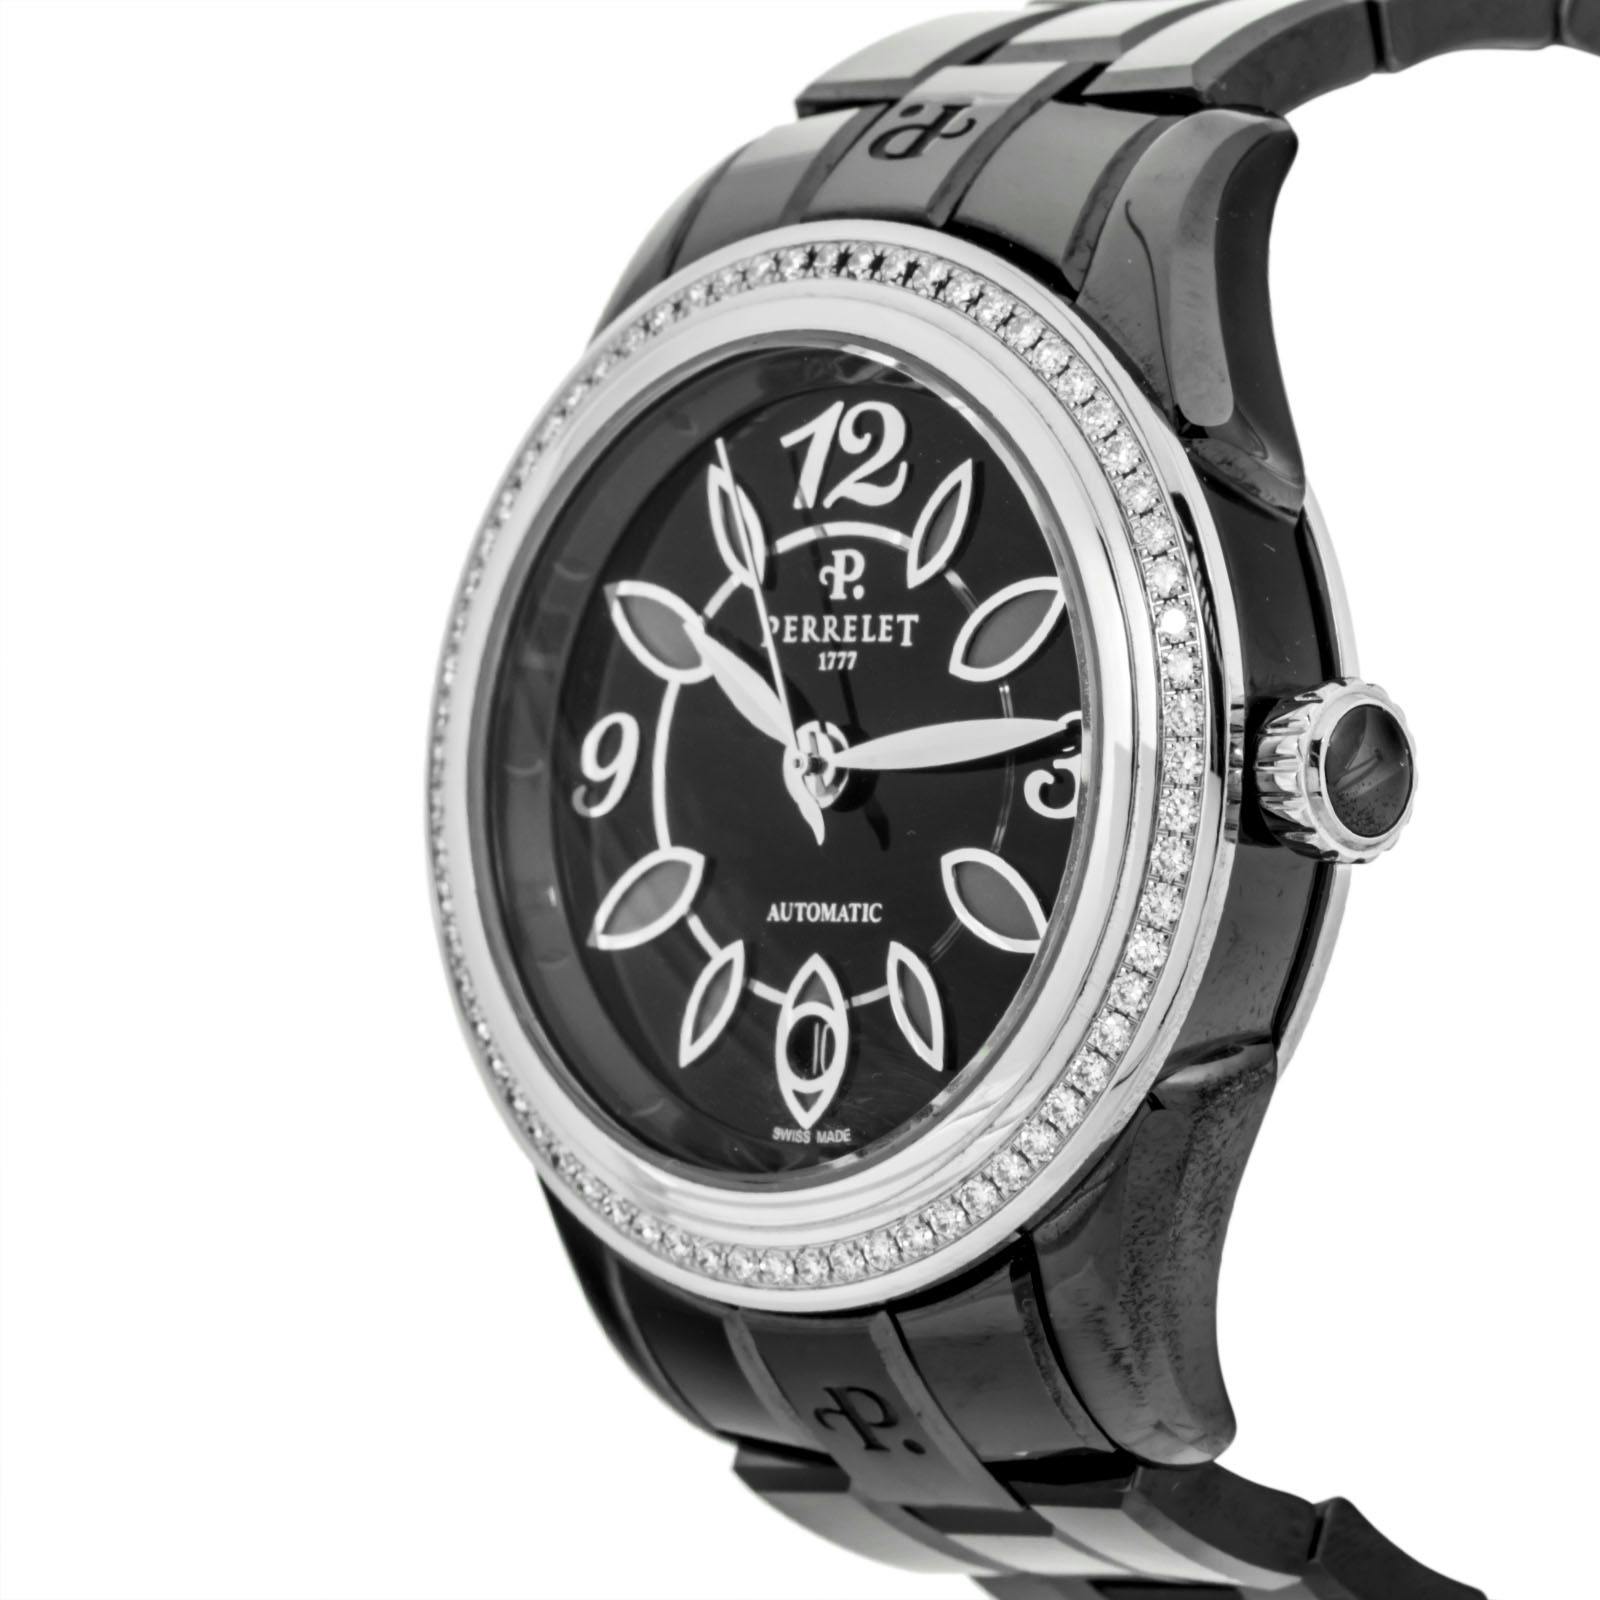 Jean d'Eve Sectora Large – Vintage Double Retrograde Watch – Chrono Hut